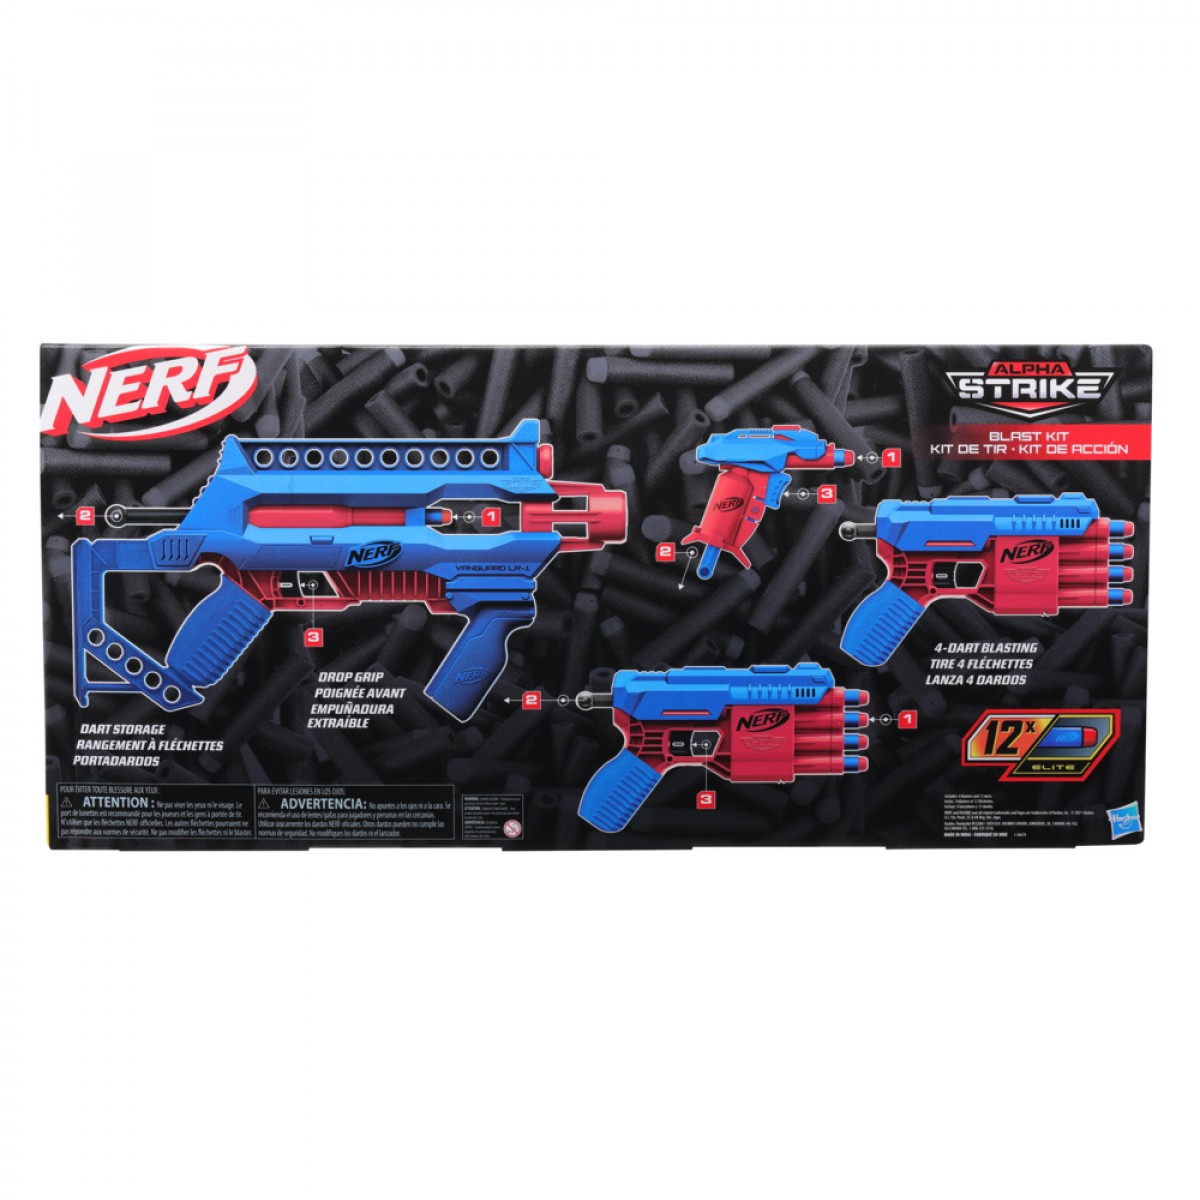 Nerf Alpha Strike Blast Kit Dart-Blasting Multi-Pack, Includes 4 Blasters And 12 Official Nerf Elite Darts, 8Yrs+, Multicolour